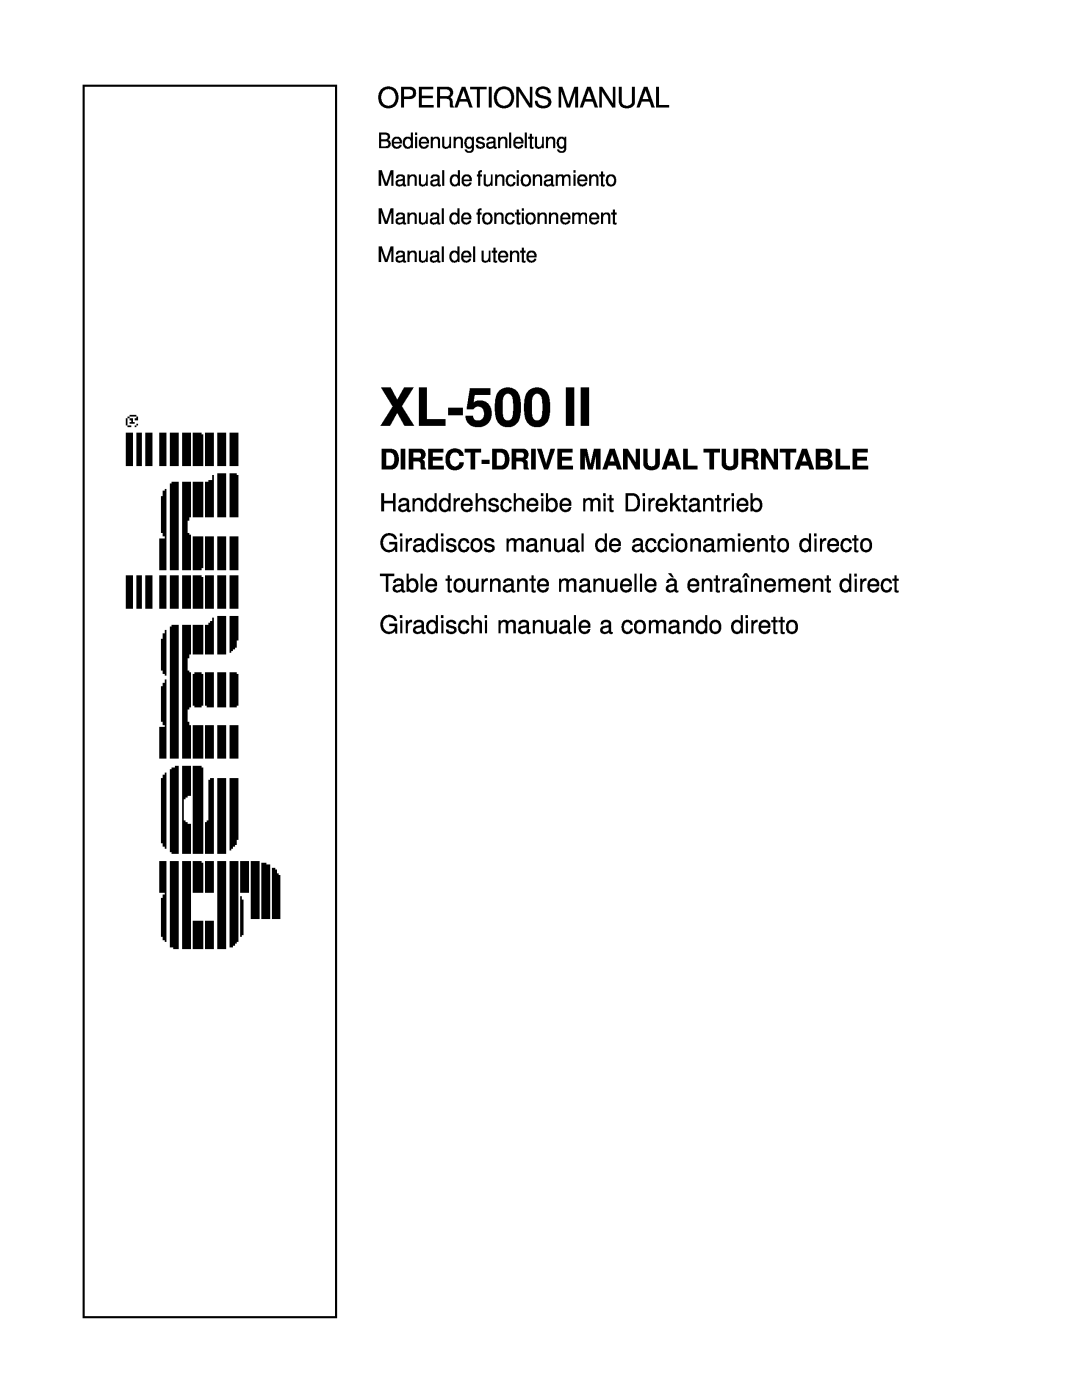 Gemini XL-500 II manual Bedienungsanleltung Manual de funcionamiento, Manual de fonctionnement Manual del utente, XL-500II 